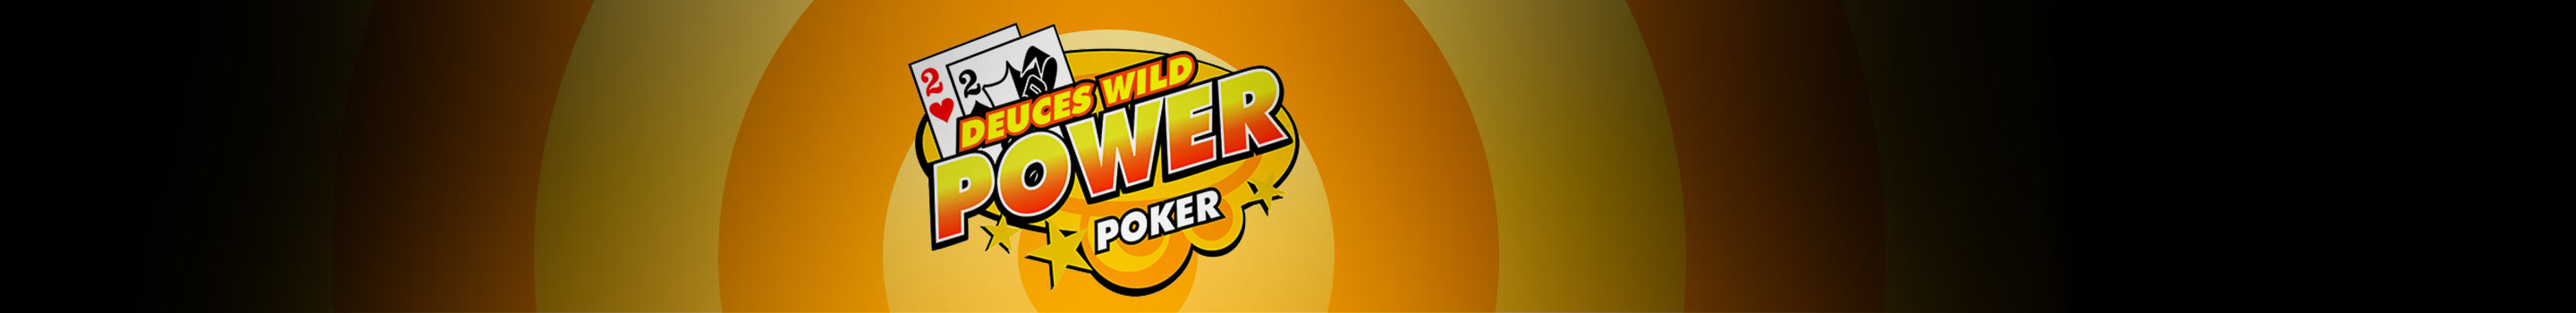 Deuces Wild 4 Play Power Poker